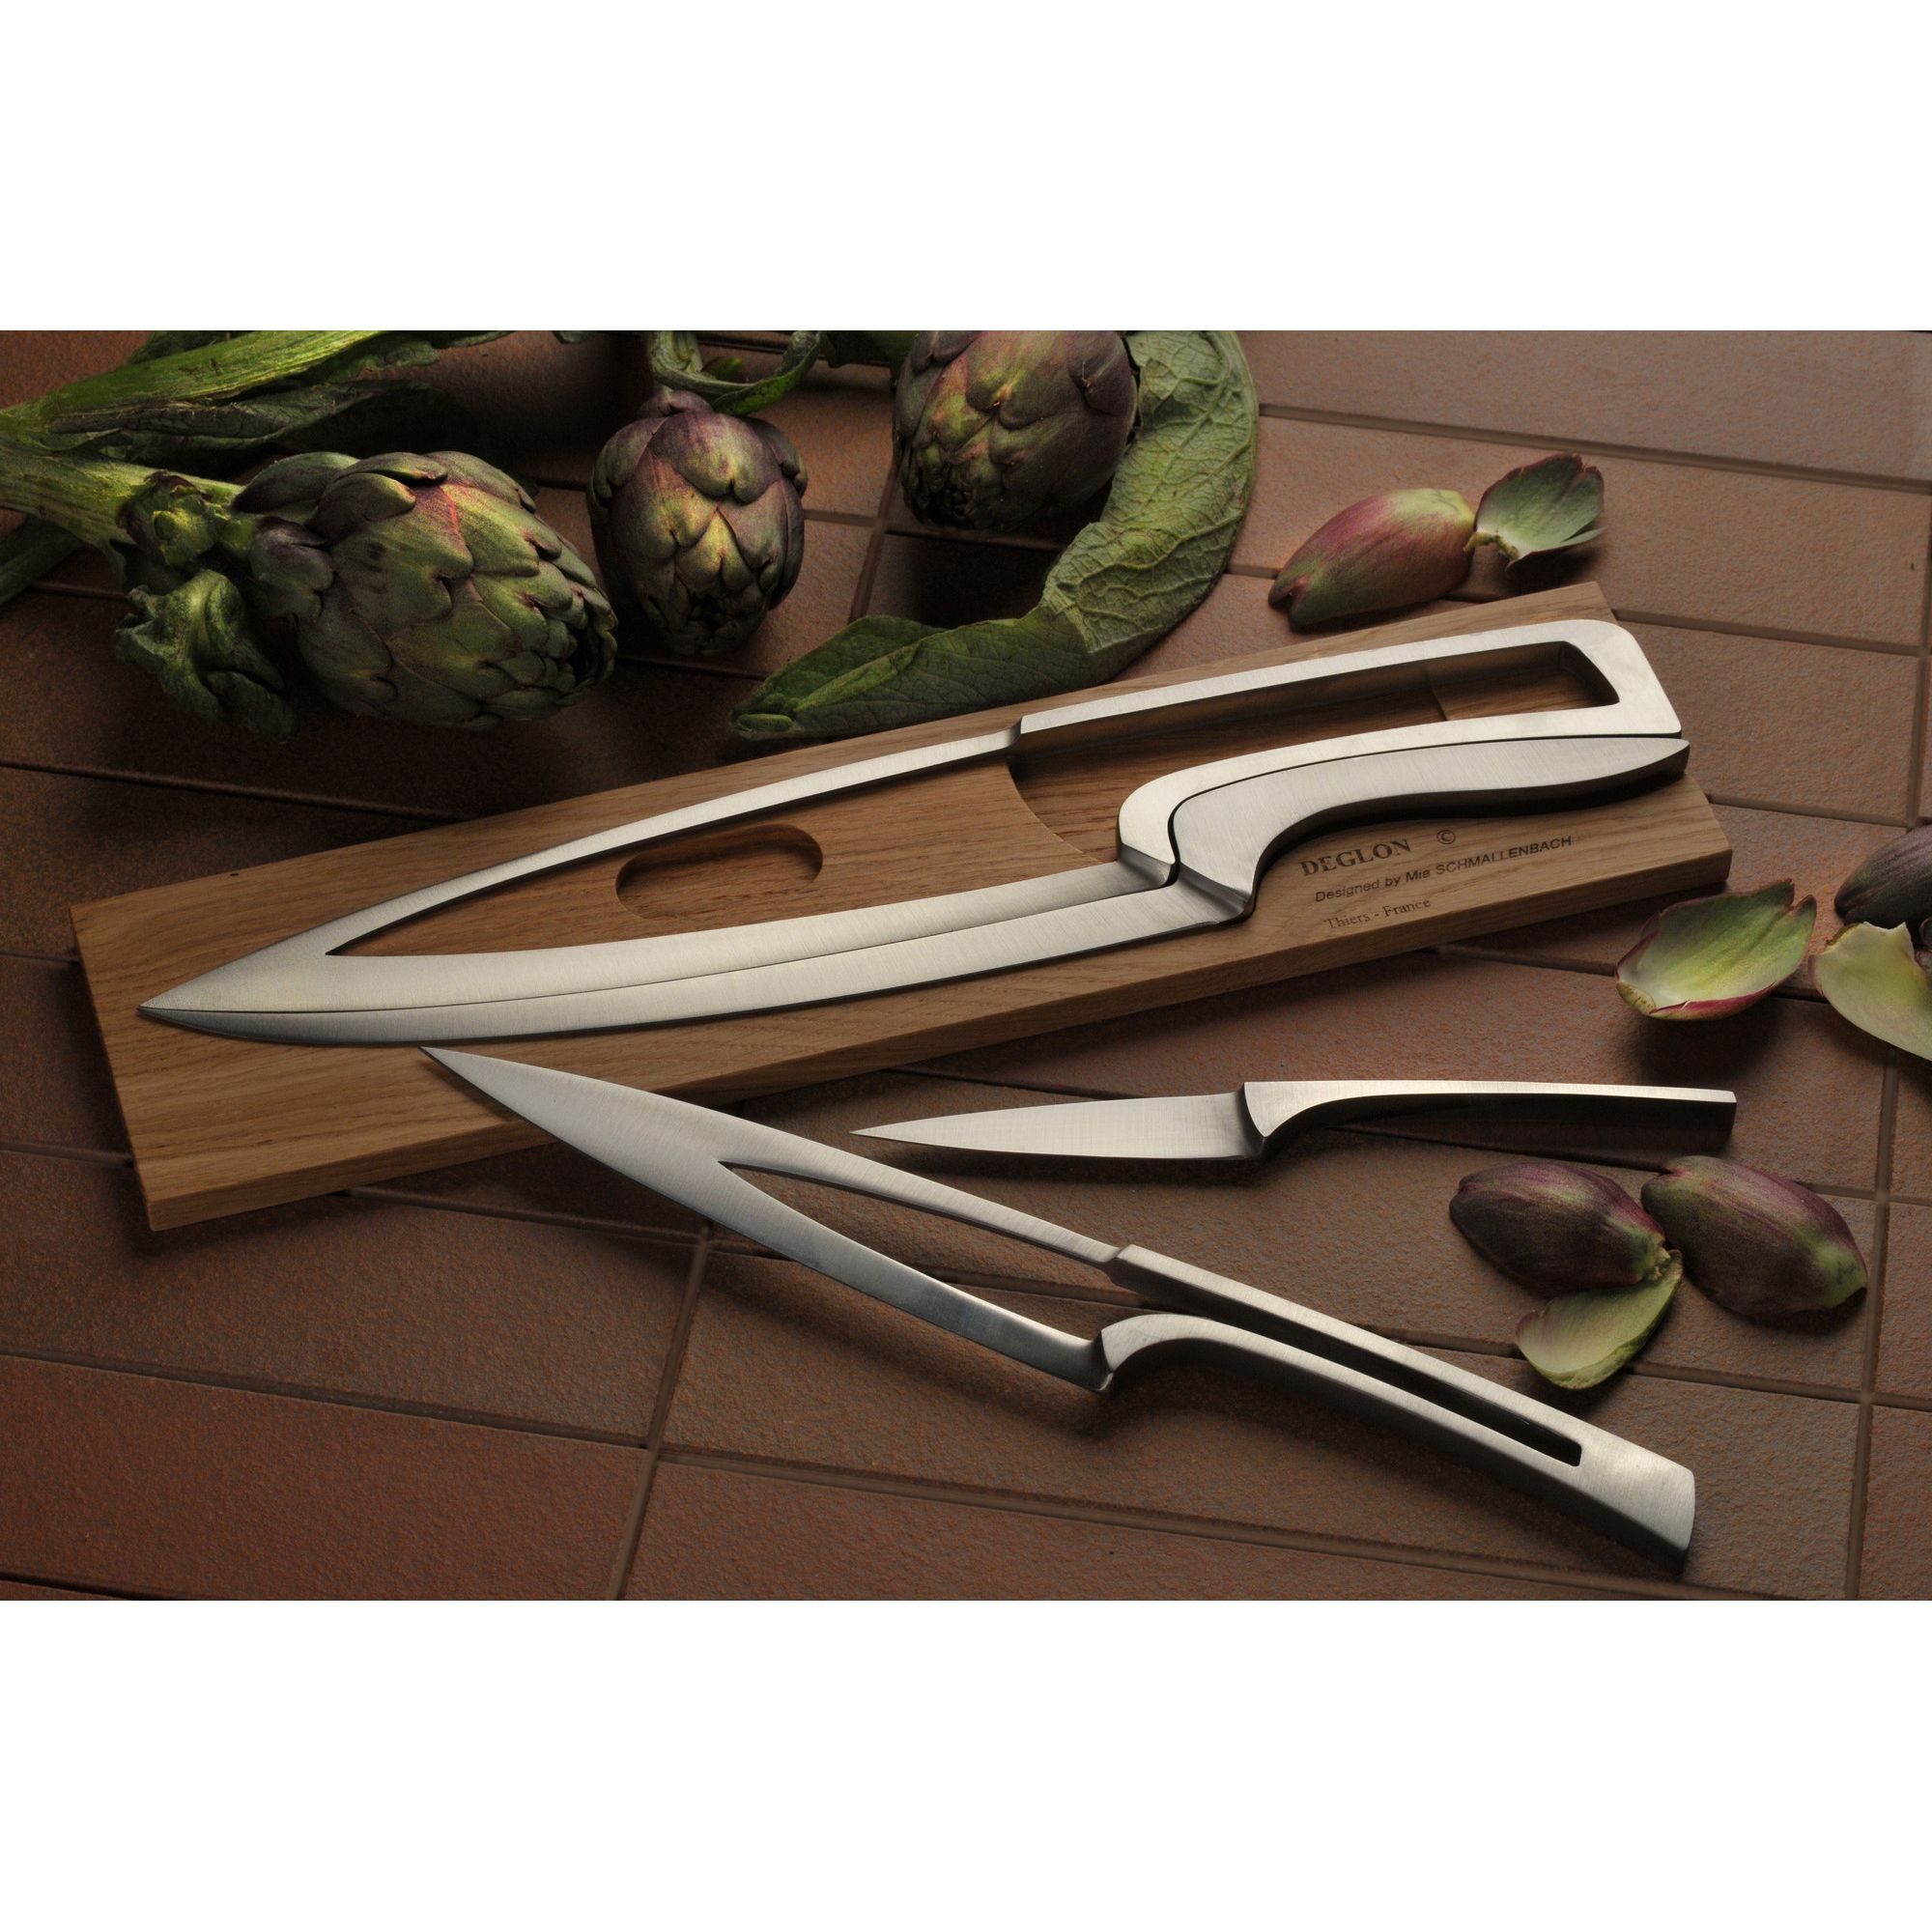 DÃ©glon Meeting Knives 4 Piece Knife Set with Oak Base at Tesco Direct